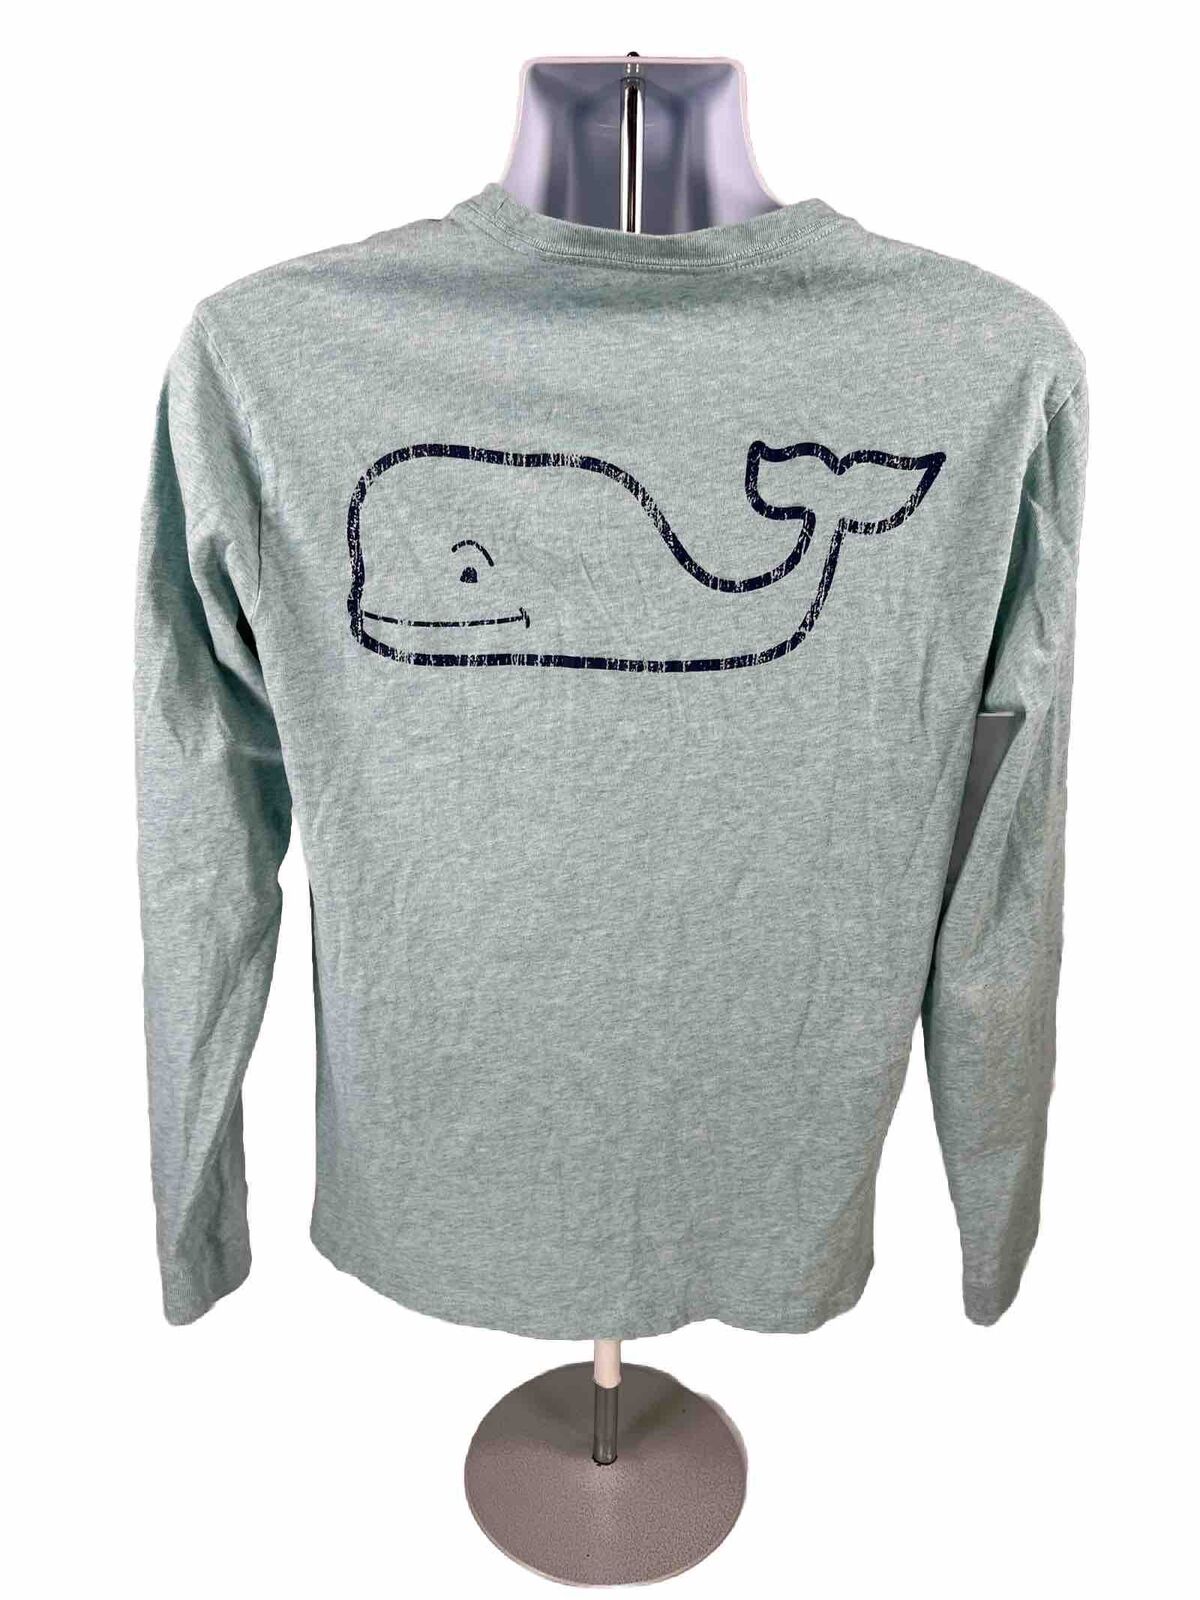 Vineyard Vines Men's Light Blue Long Sleeve Whale Graphic T-Shirt - S